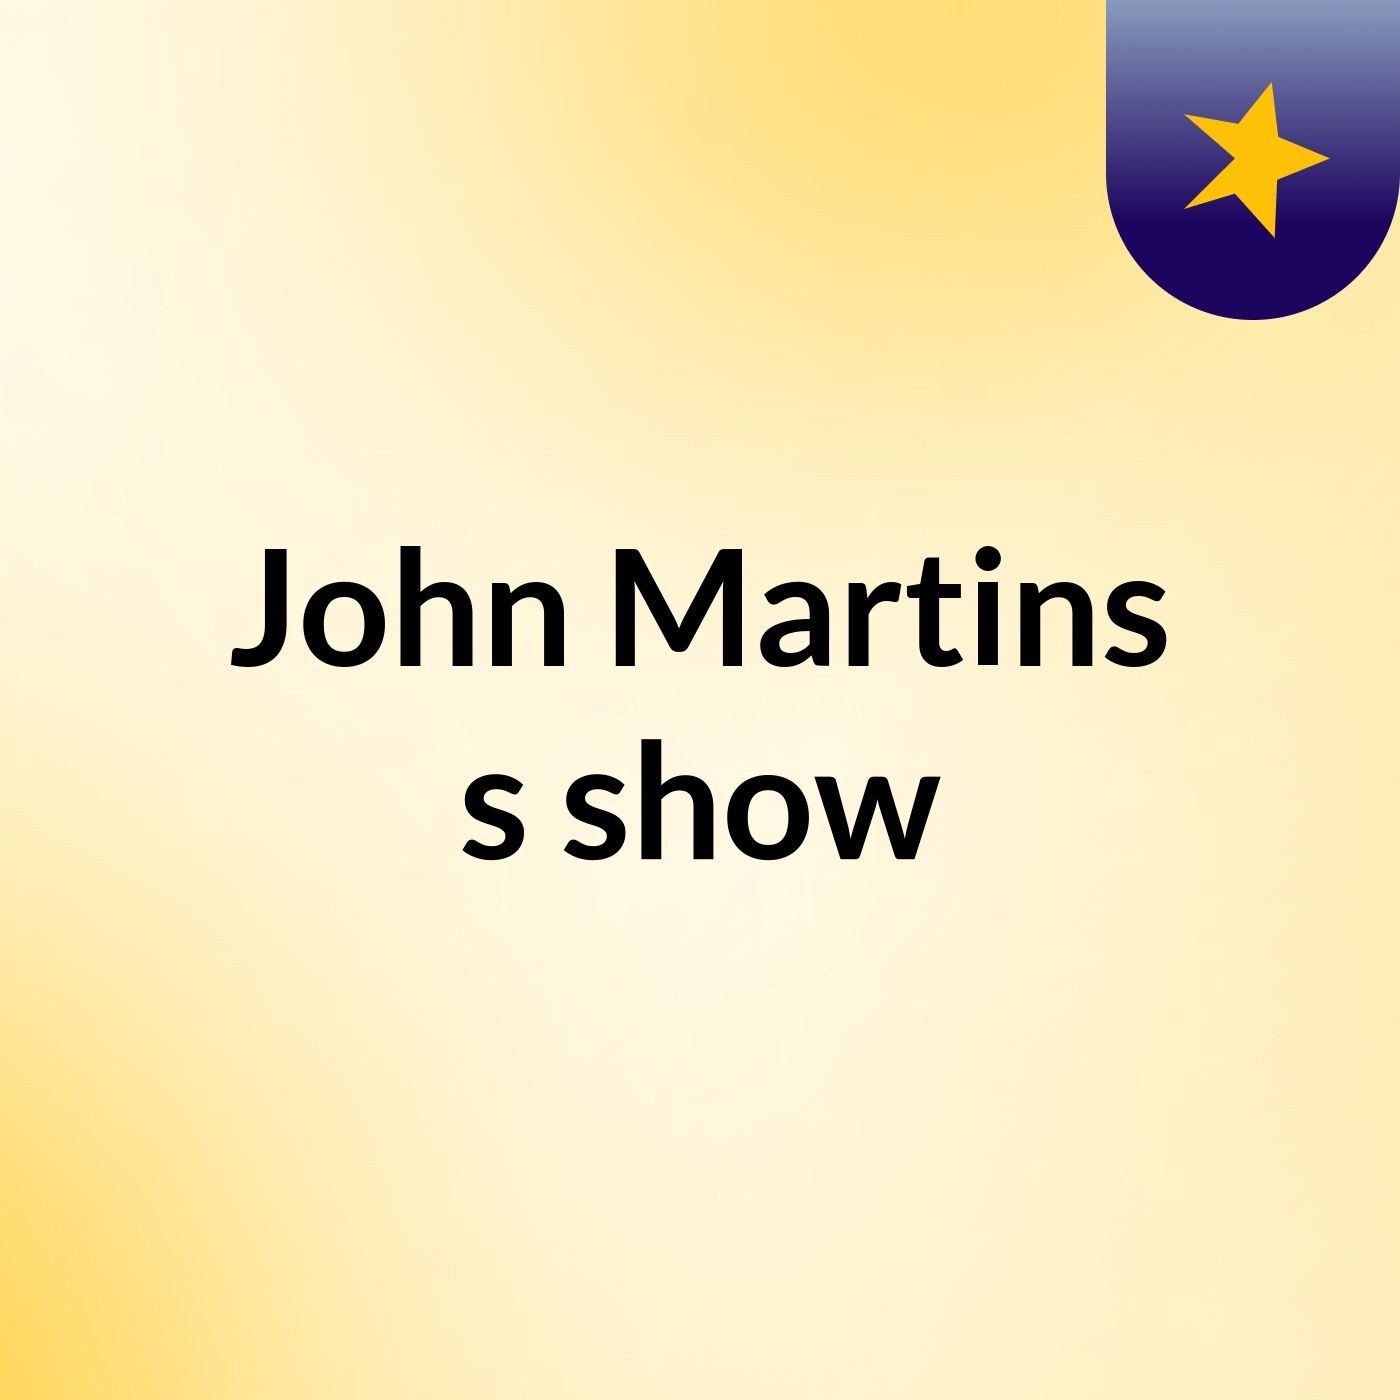 John Martins's show